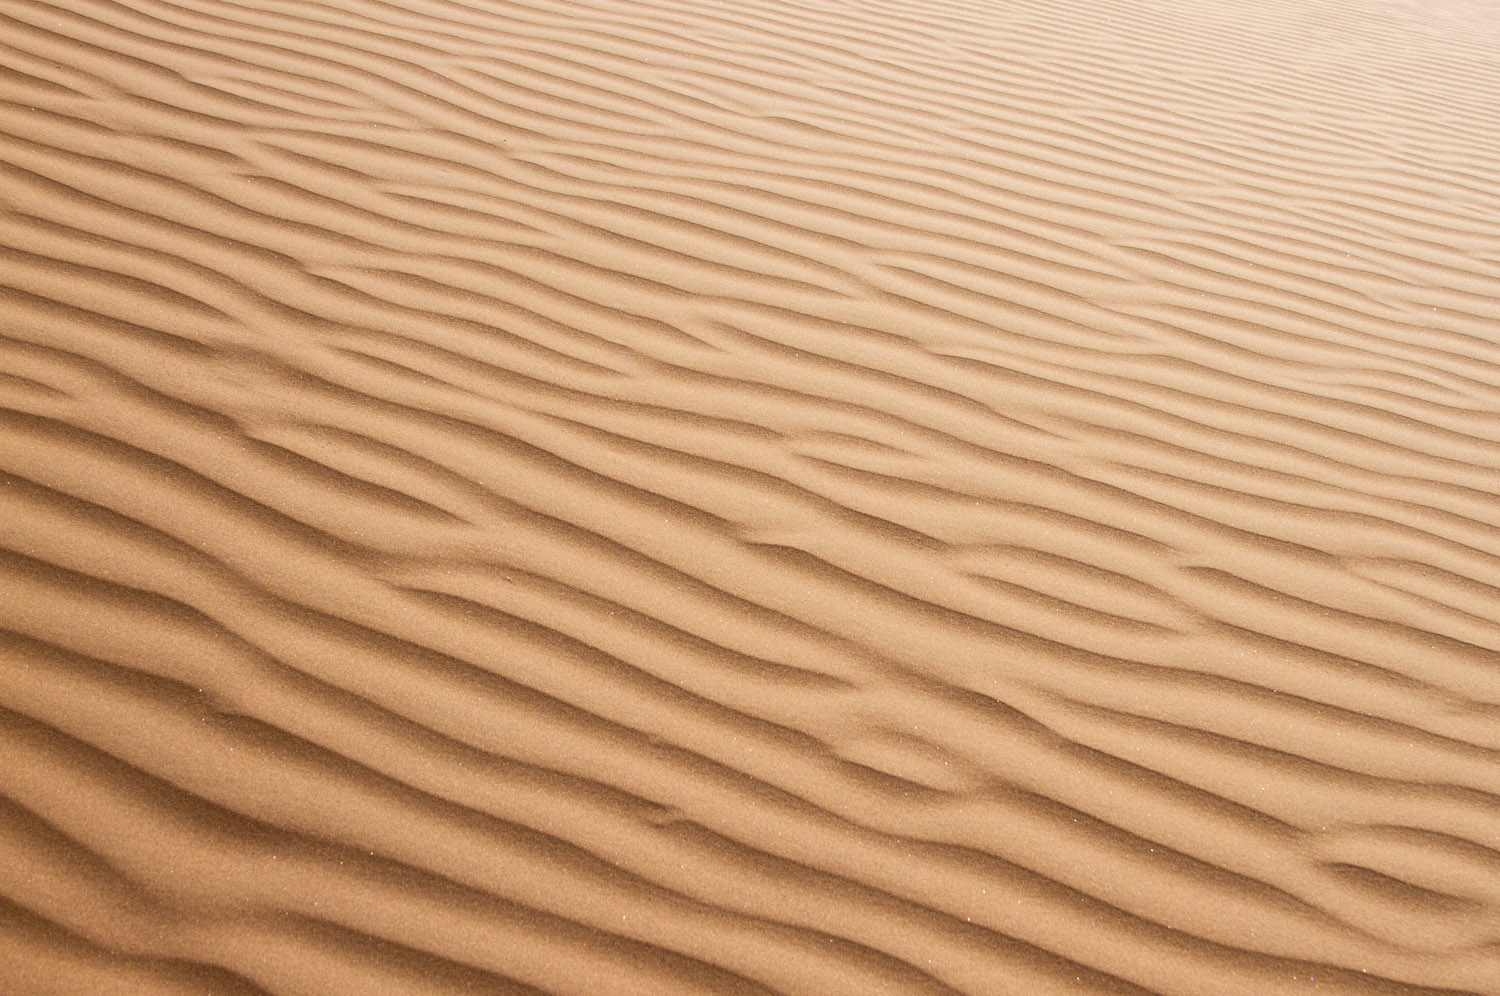 Christian-Schaffer-Oman-Al-Sharqiya-Sands.jpg